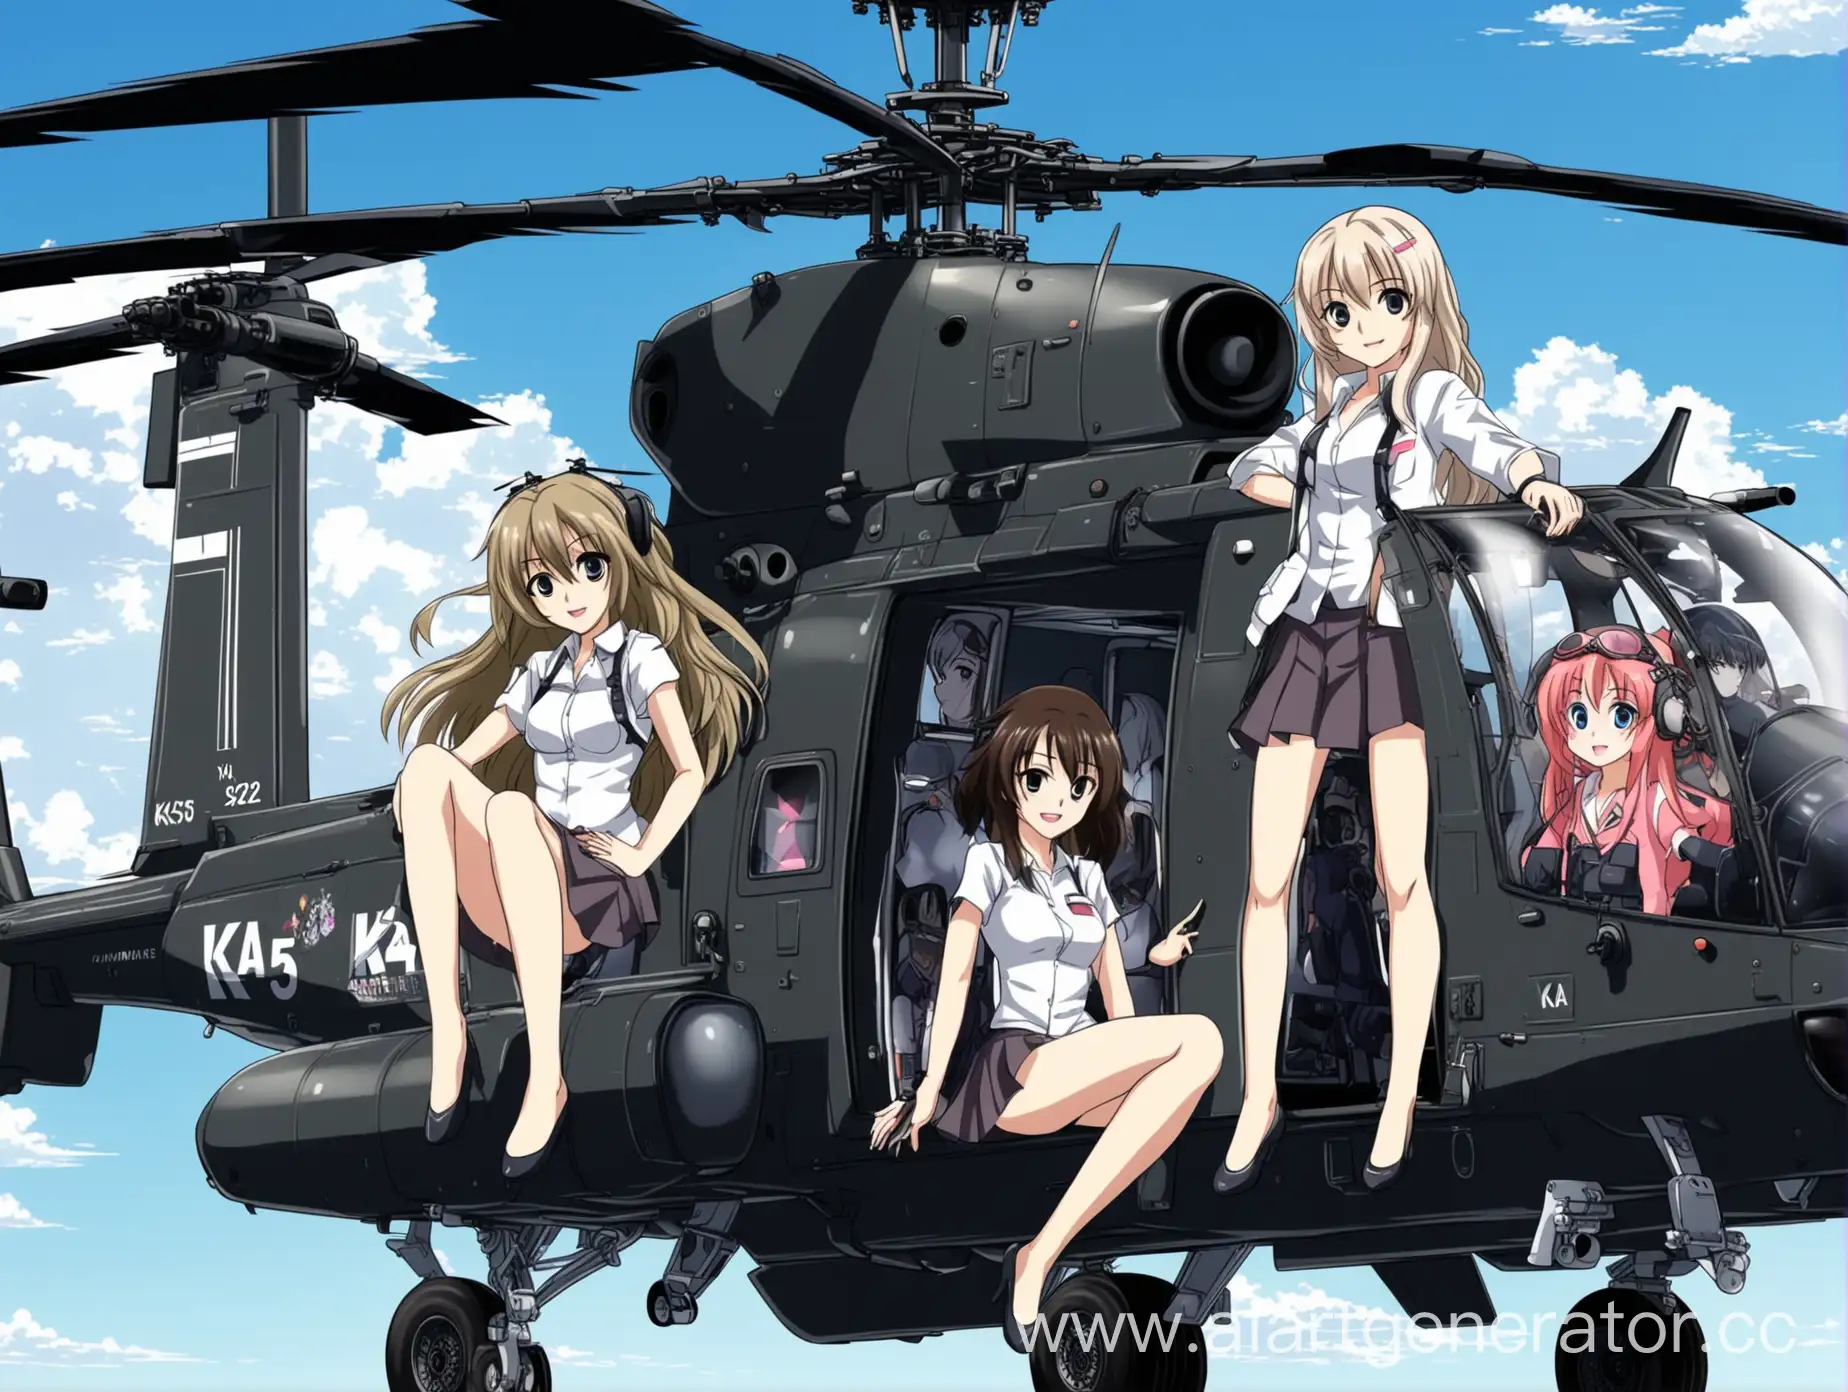 Anime-Girls-Riding-Ka52-Helicopter-Adventure